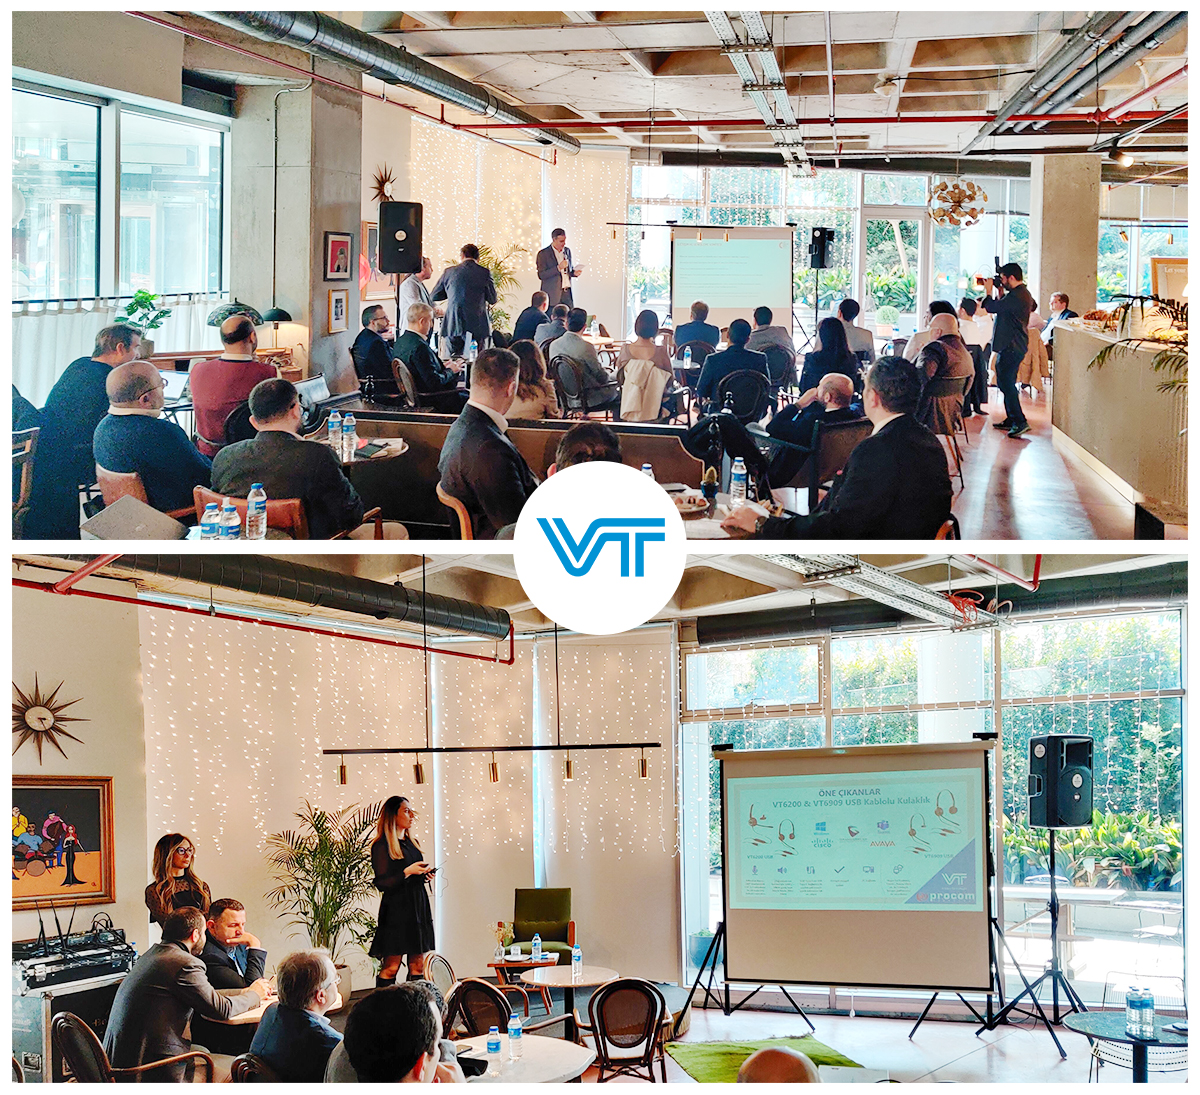 VT Turkey Distributor PT successfully ran the VT Headsets presentation for CMD